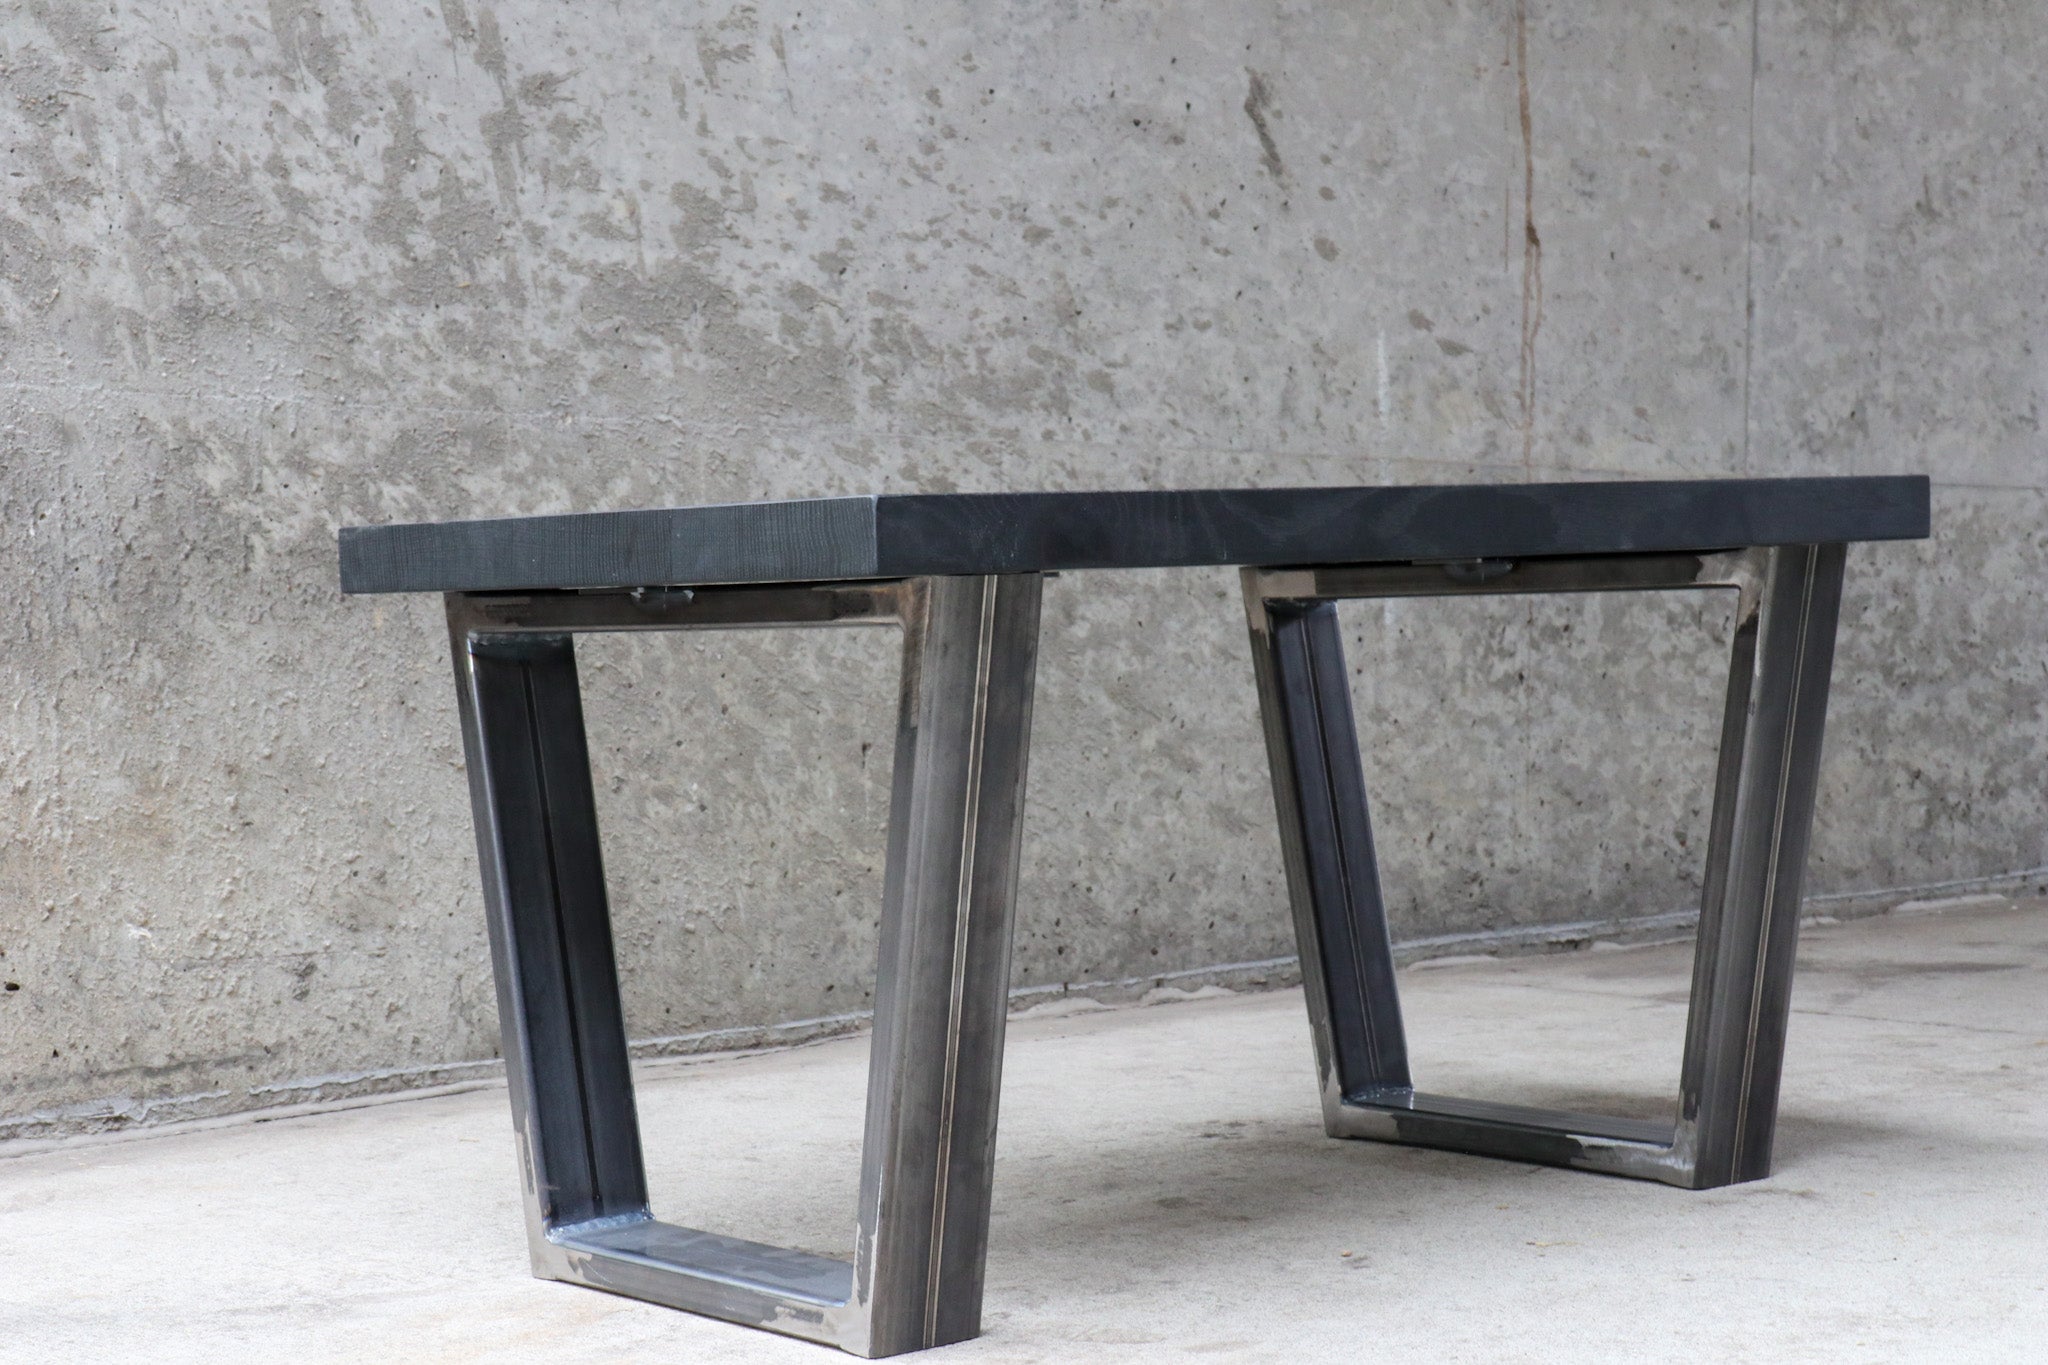 Tapered Metal Coffee Table Legs - Set of 2